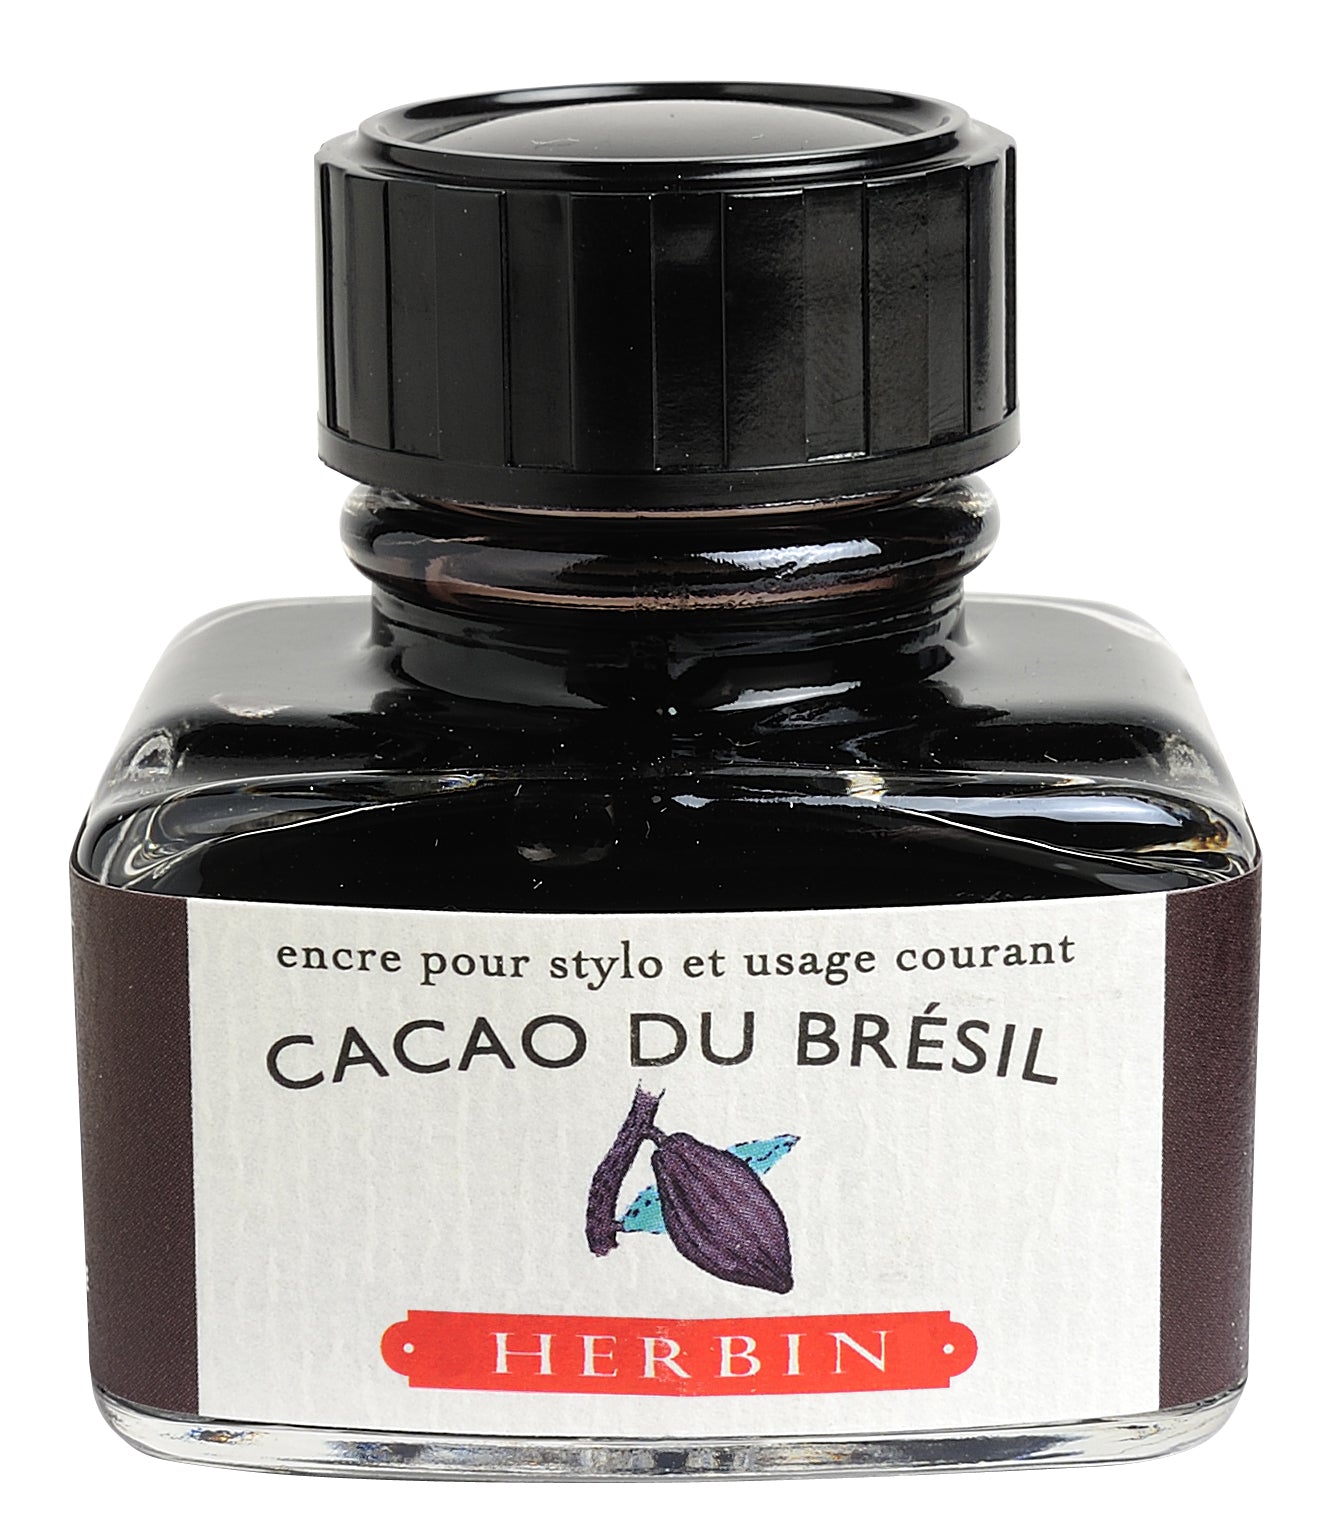 Herbin ink bottle cocoa brown 30 ml / cacao du bresil